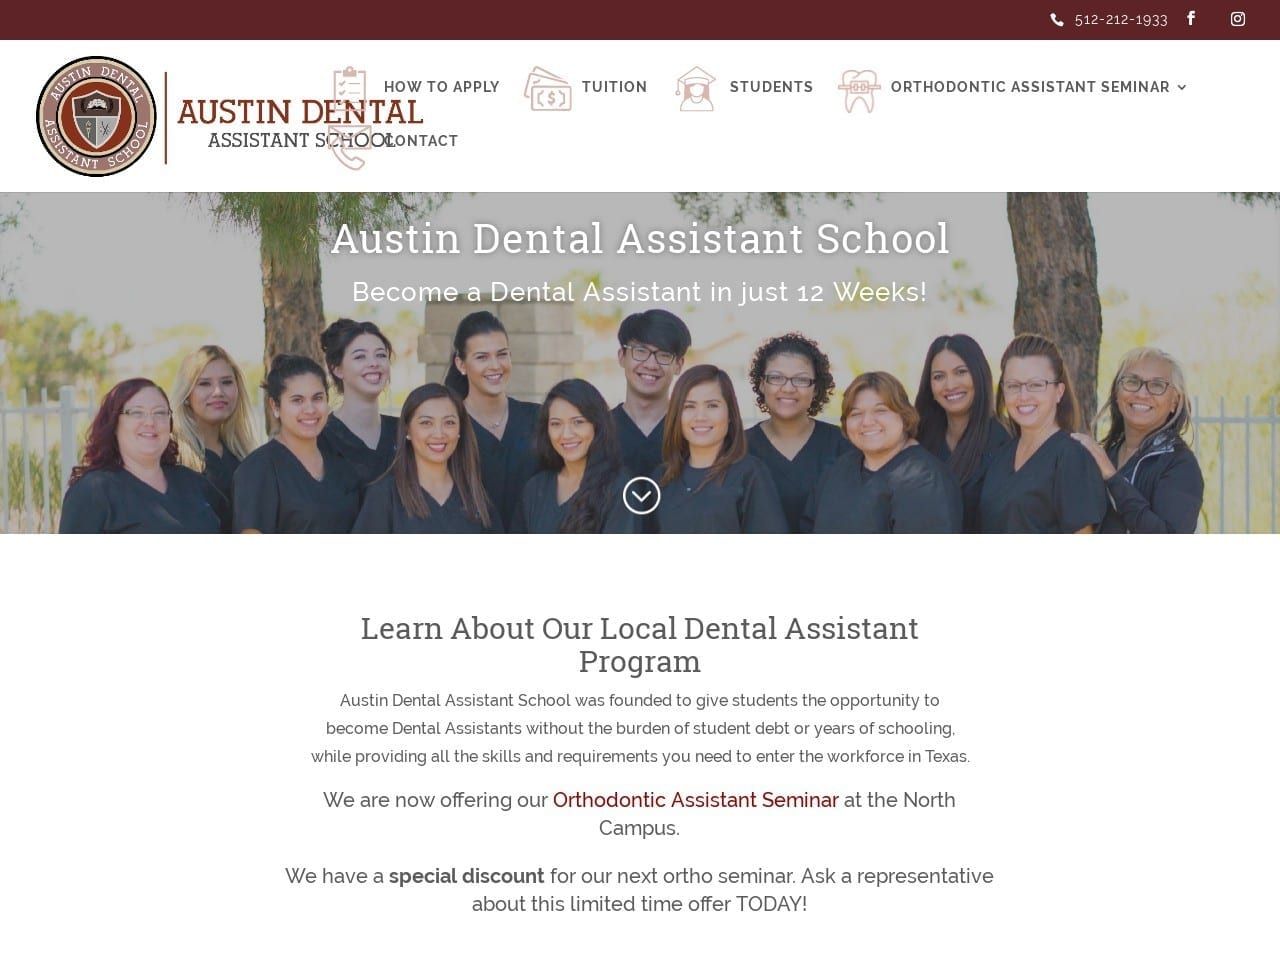 Austin Dental Assistant School Website Screenshot from austindentalassistantschool.com